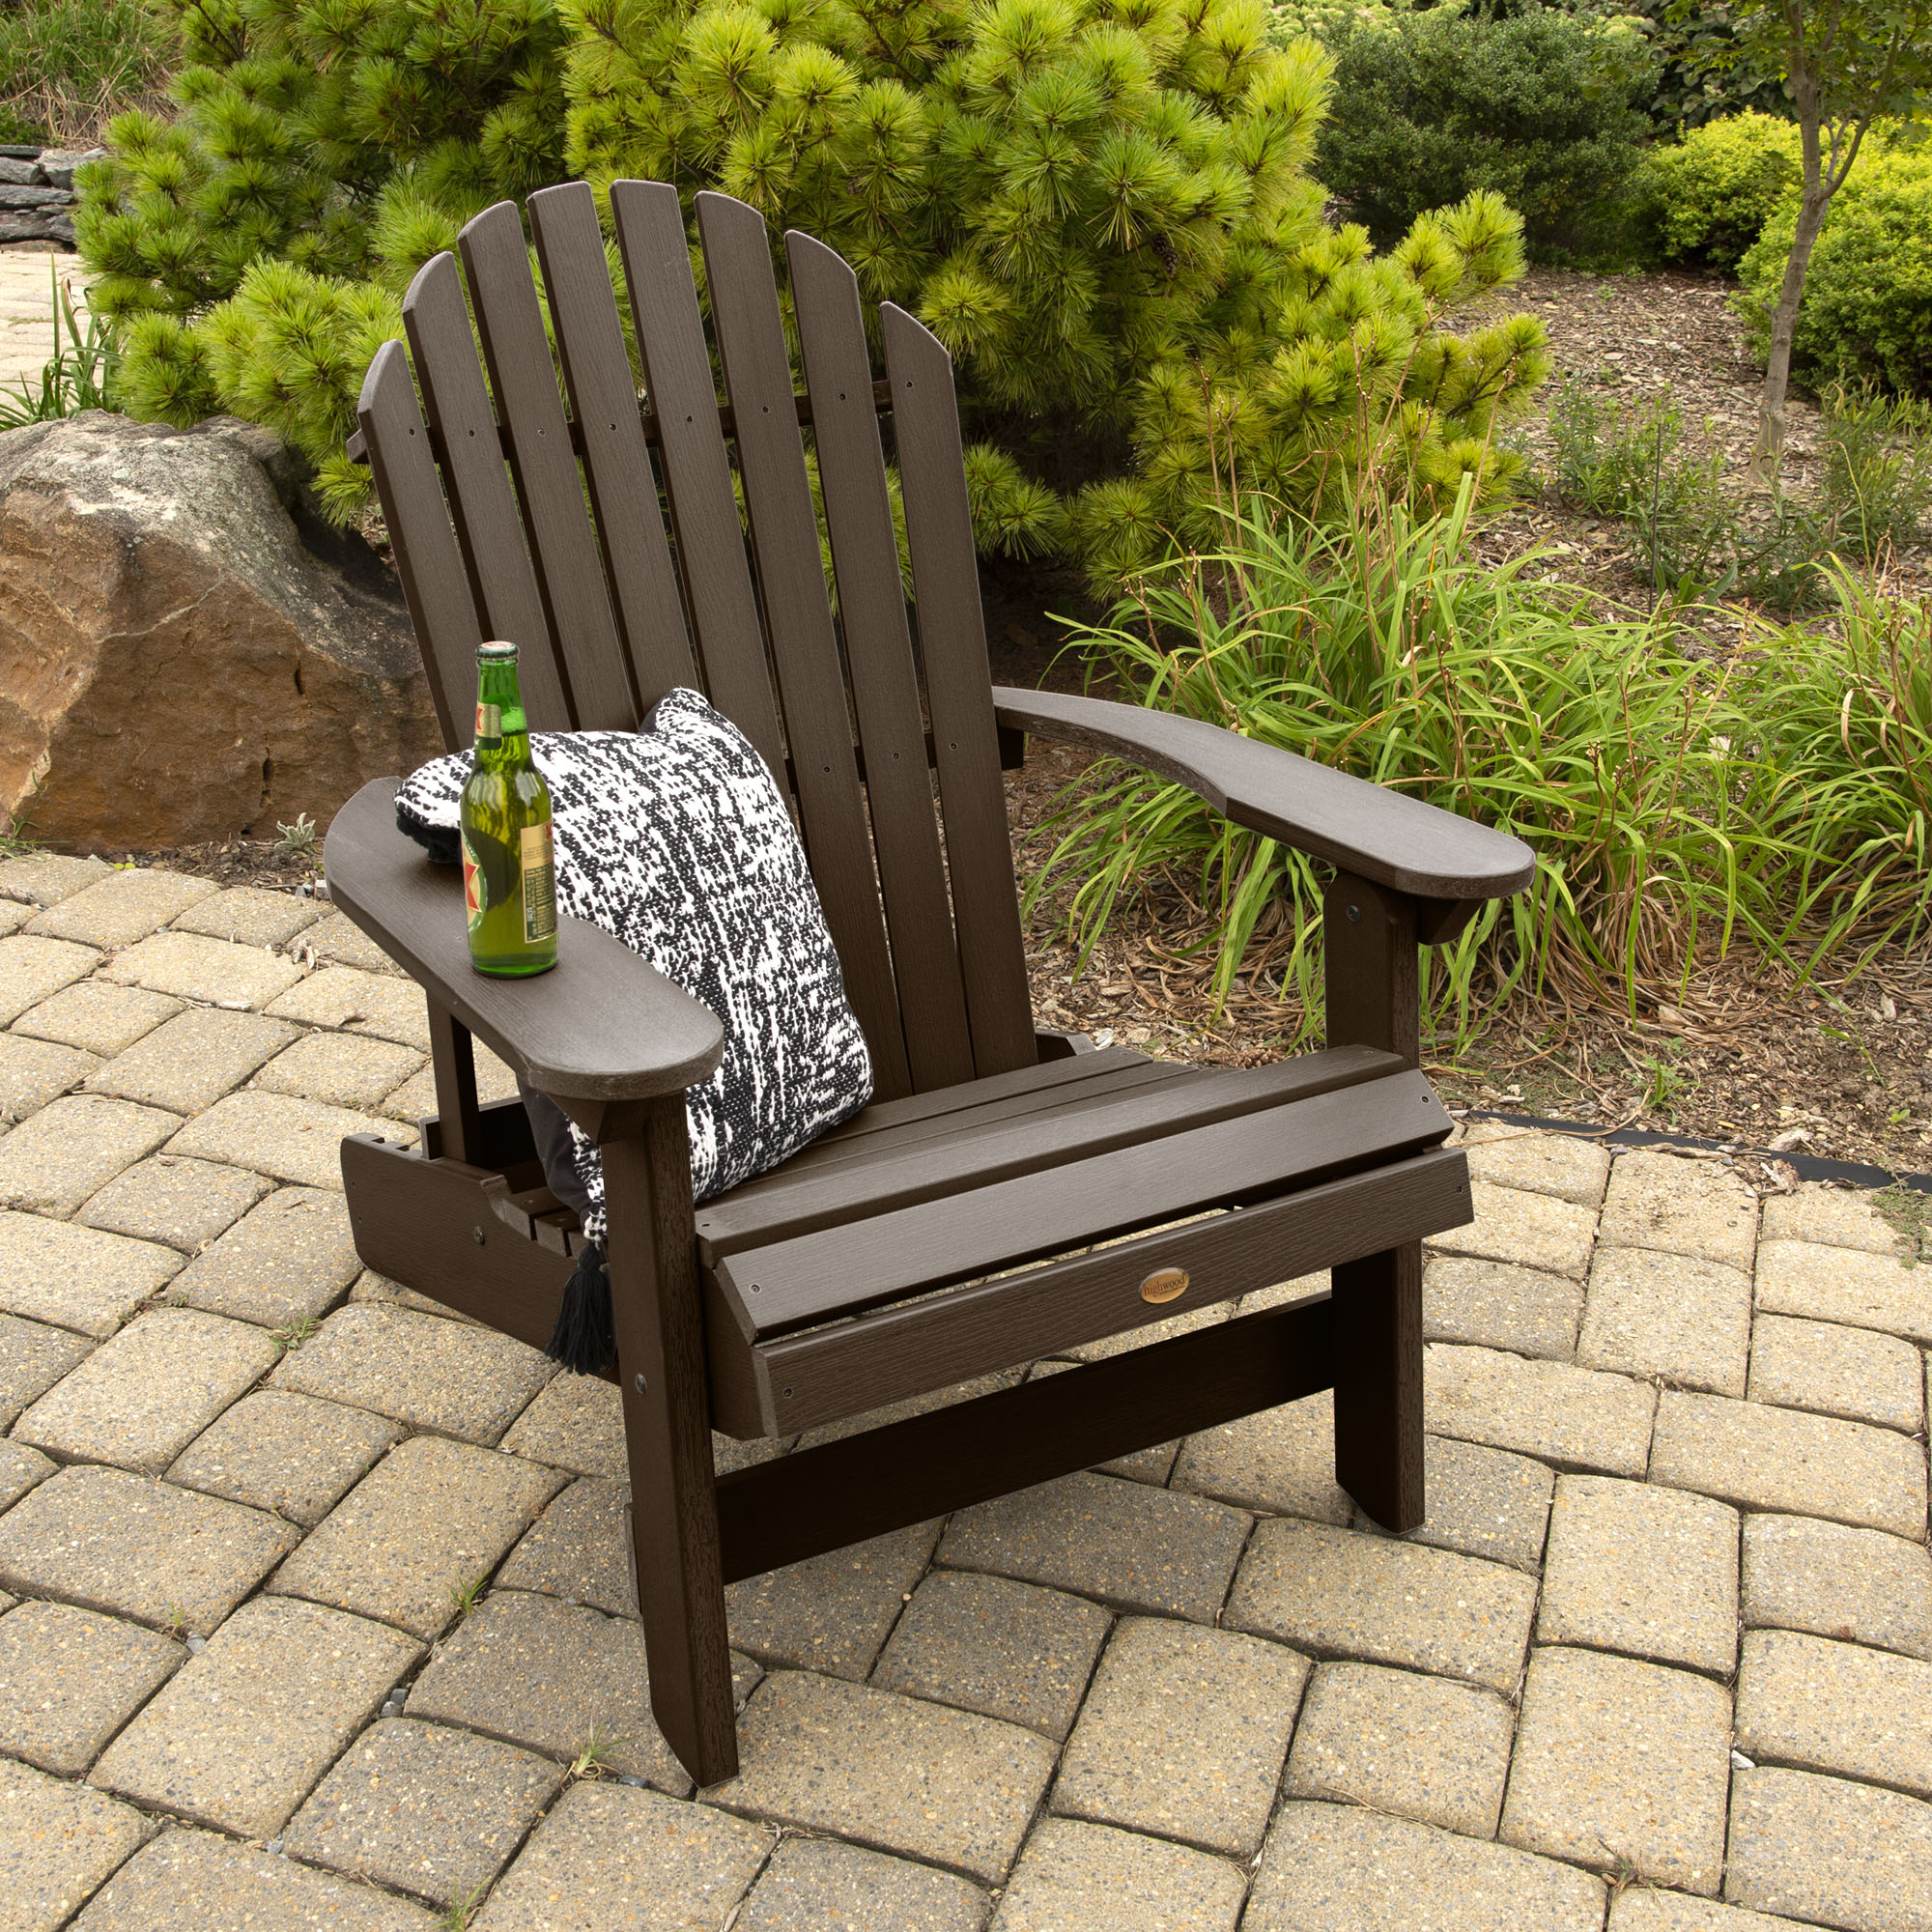 Highwood's Folding & Reclining King Hamilton Adirondack Chair - image 3 of 5